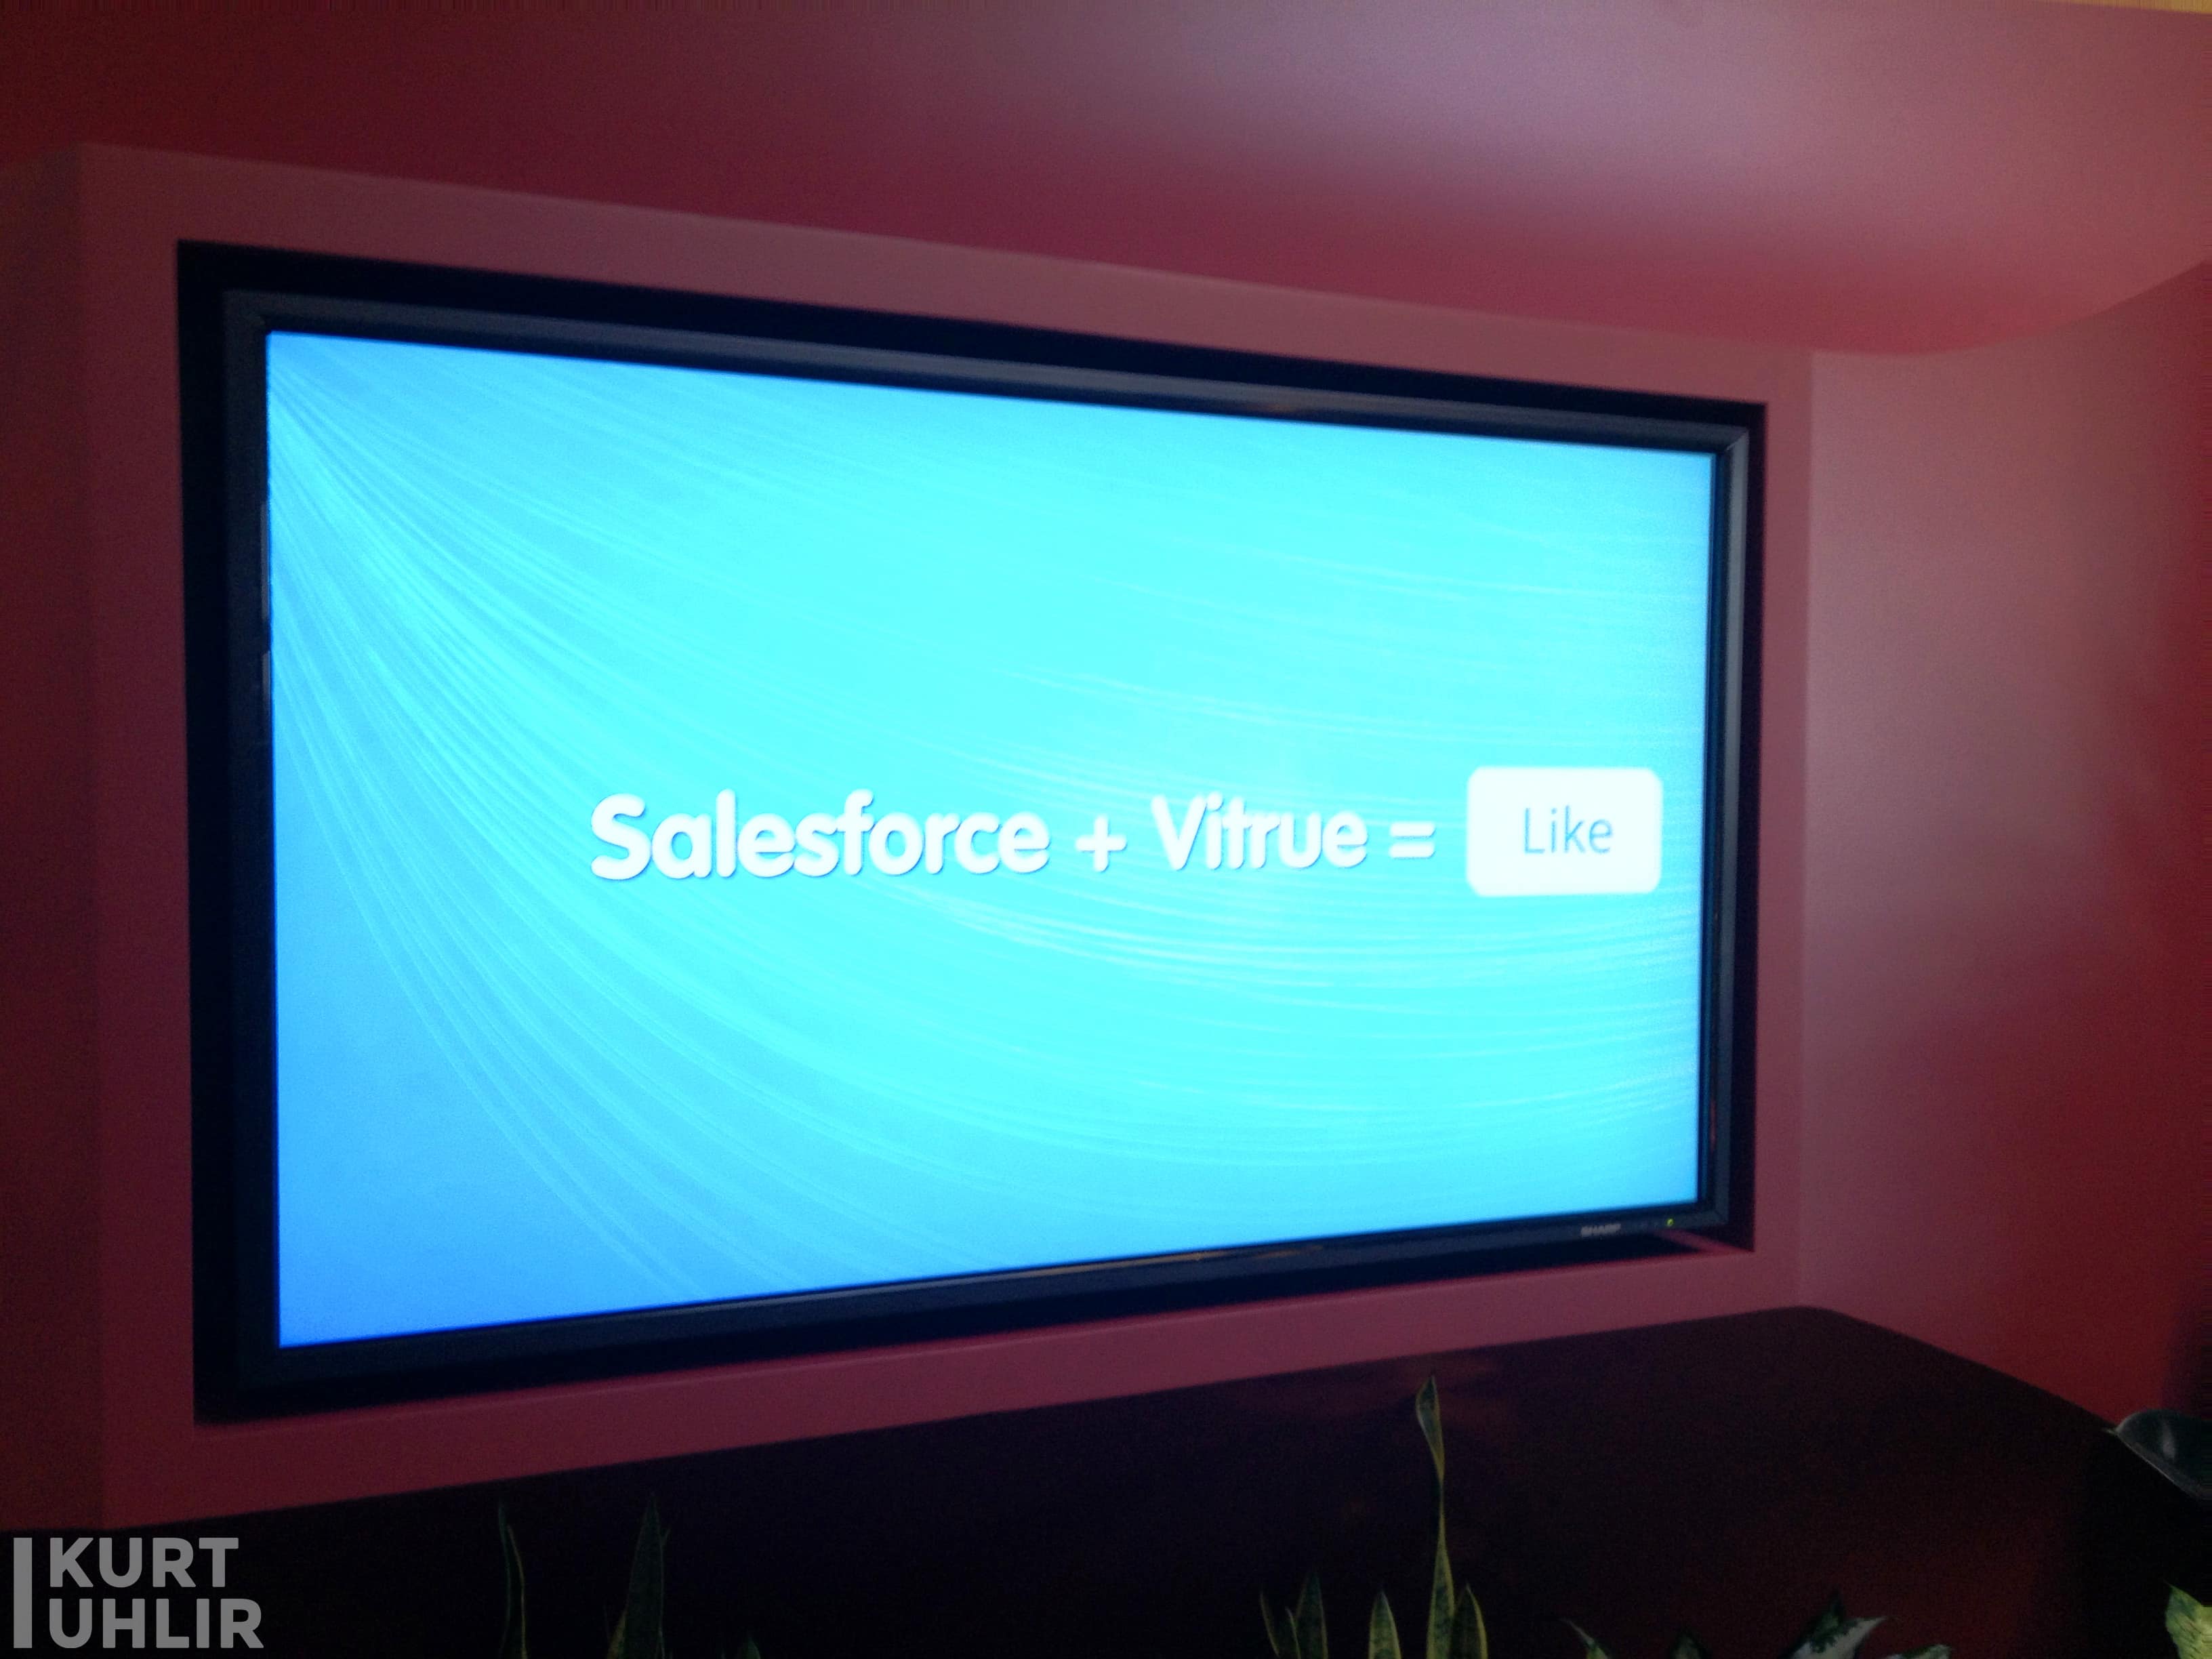 Kurt Uhlir at Salesforce.com Headquarters - Vitrue